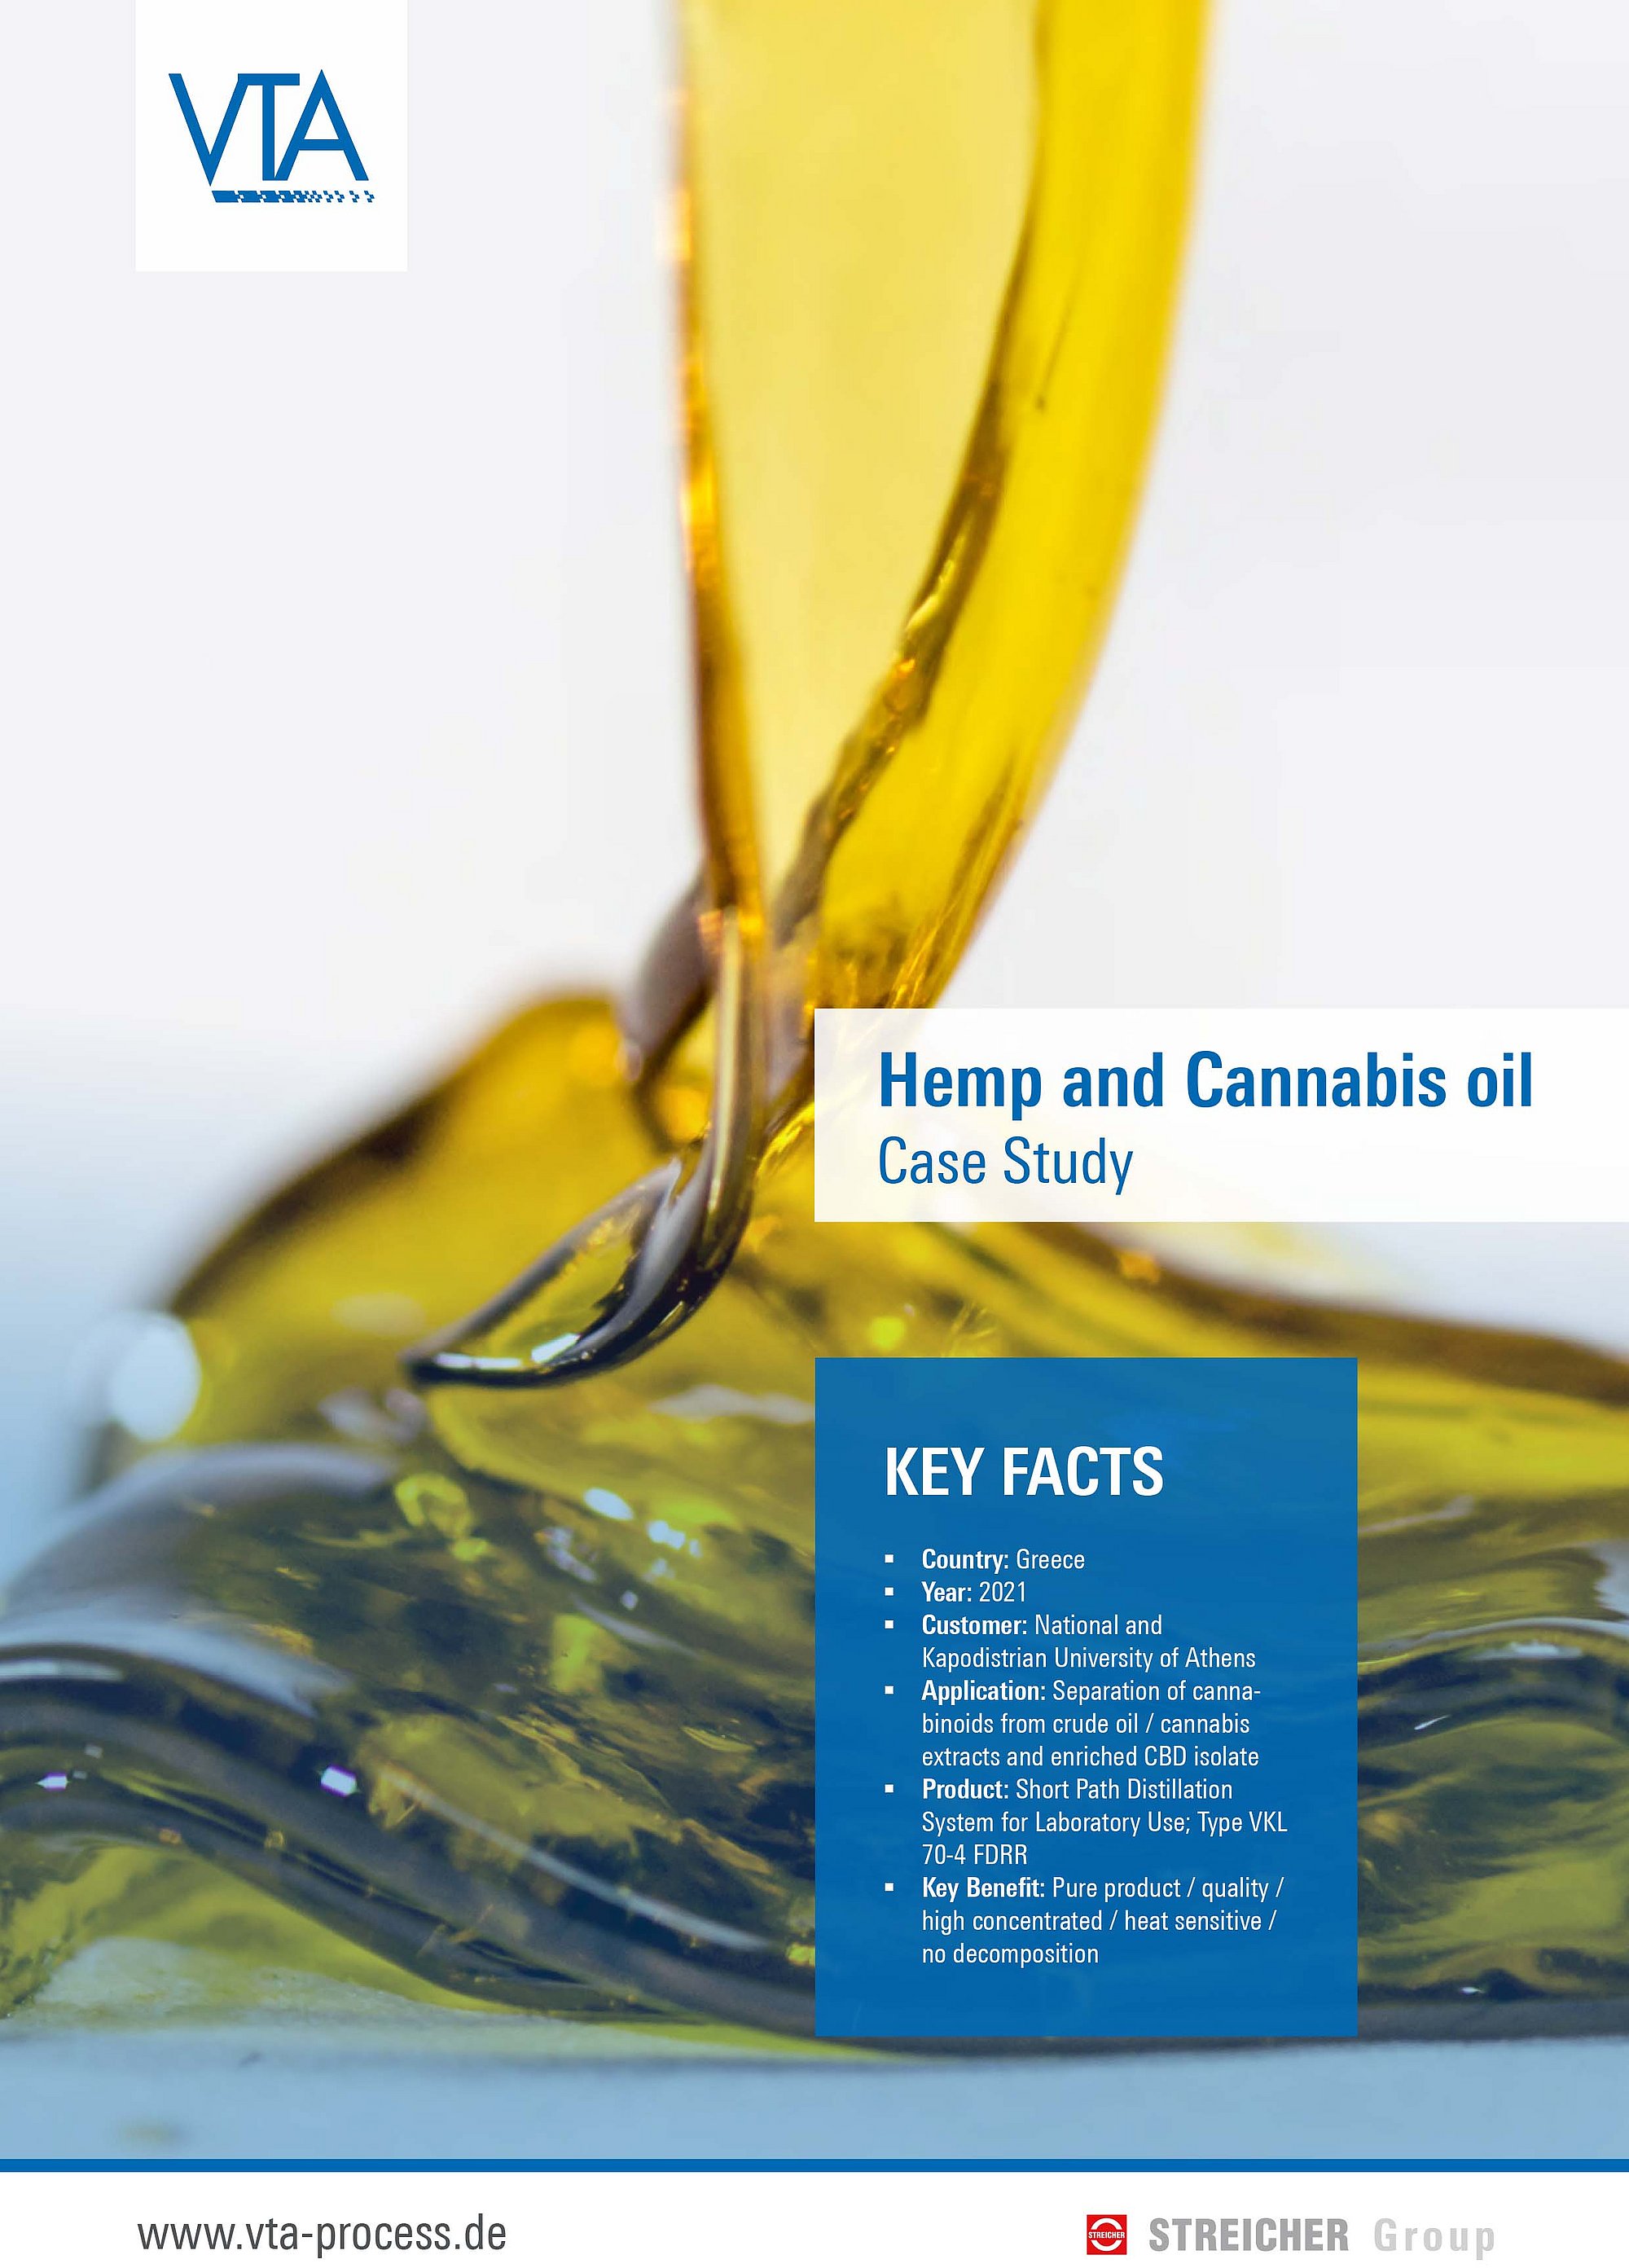 [Translate to Deutsch:] Case Study - Hemp and Cannabis oil